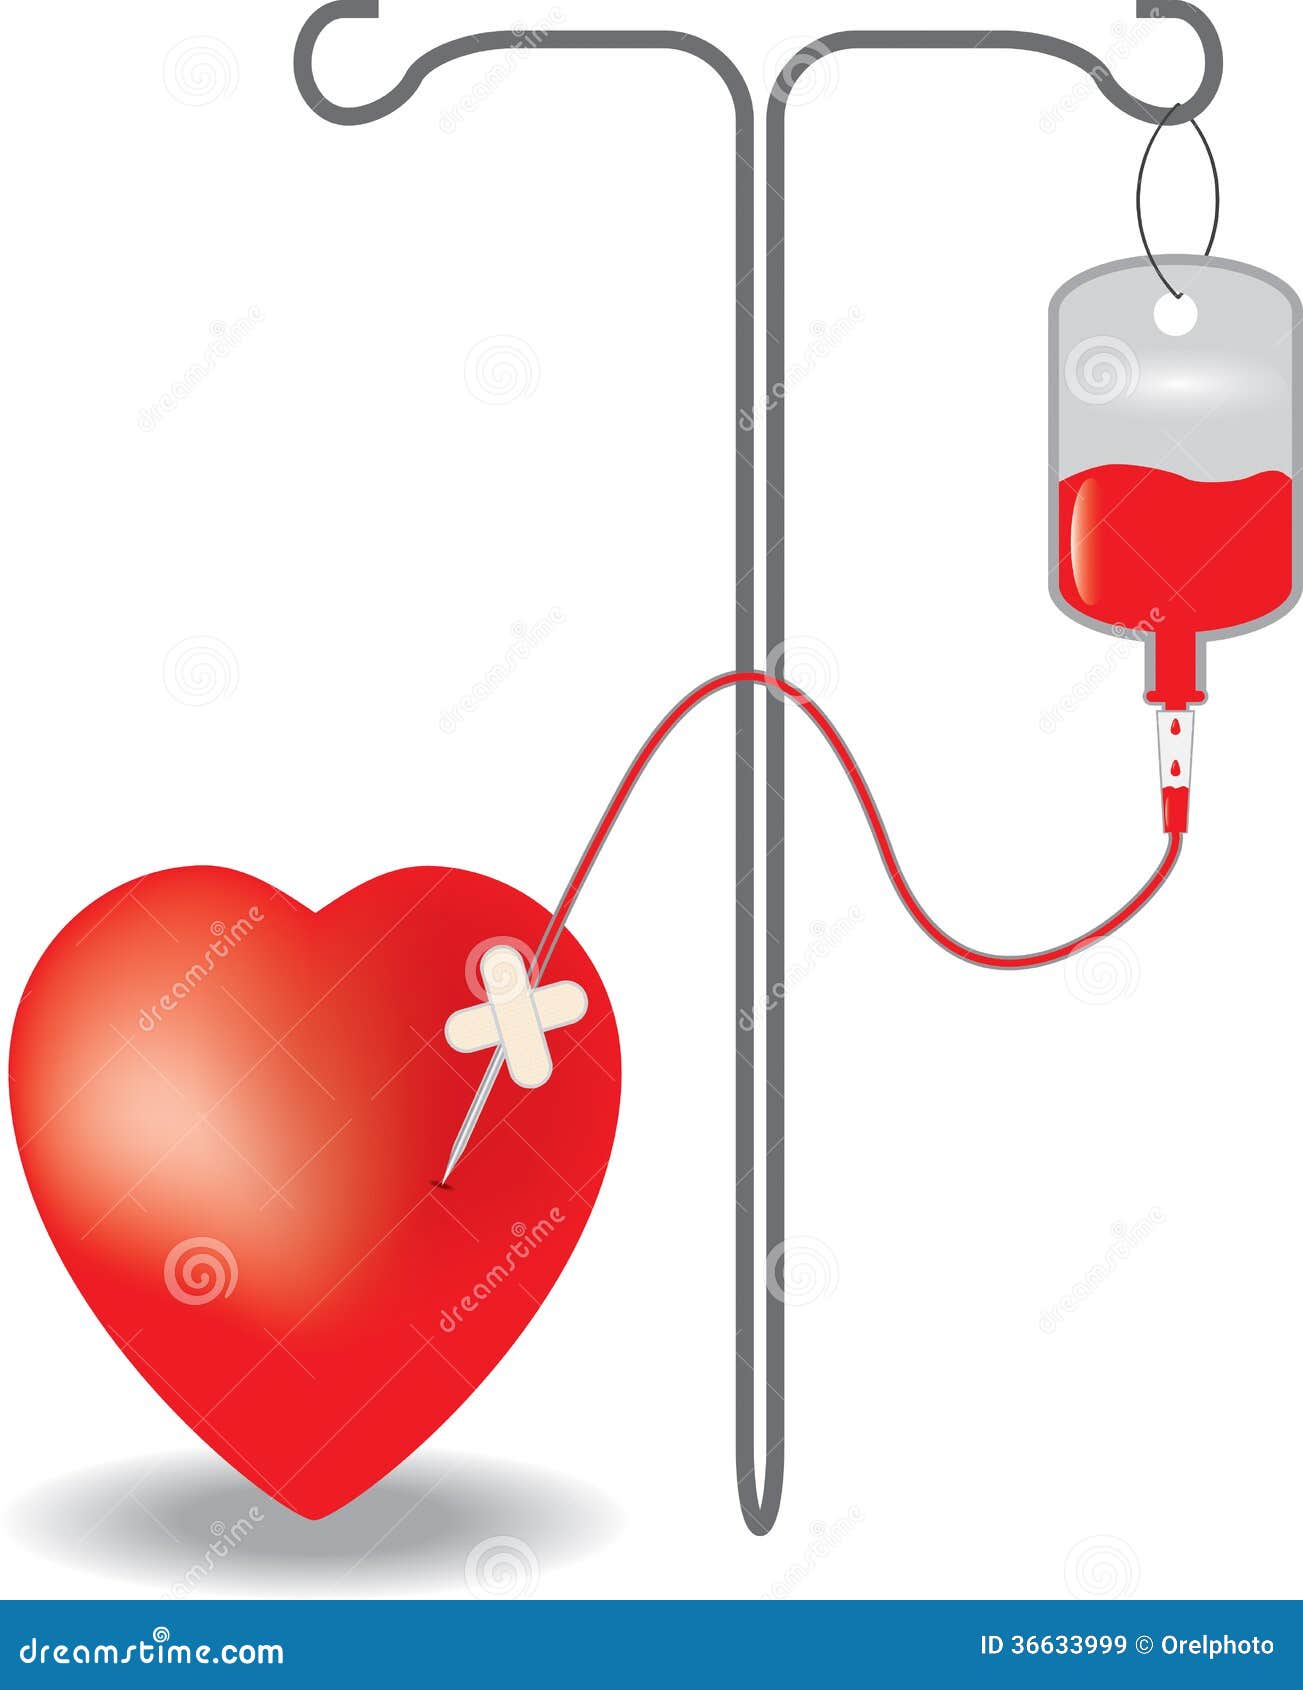 blood transfusion clipart - photo #4